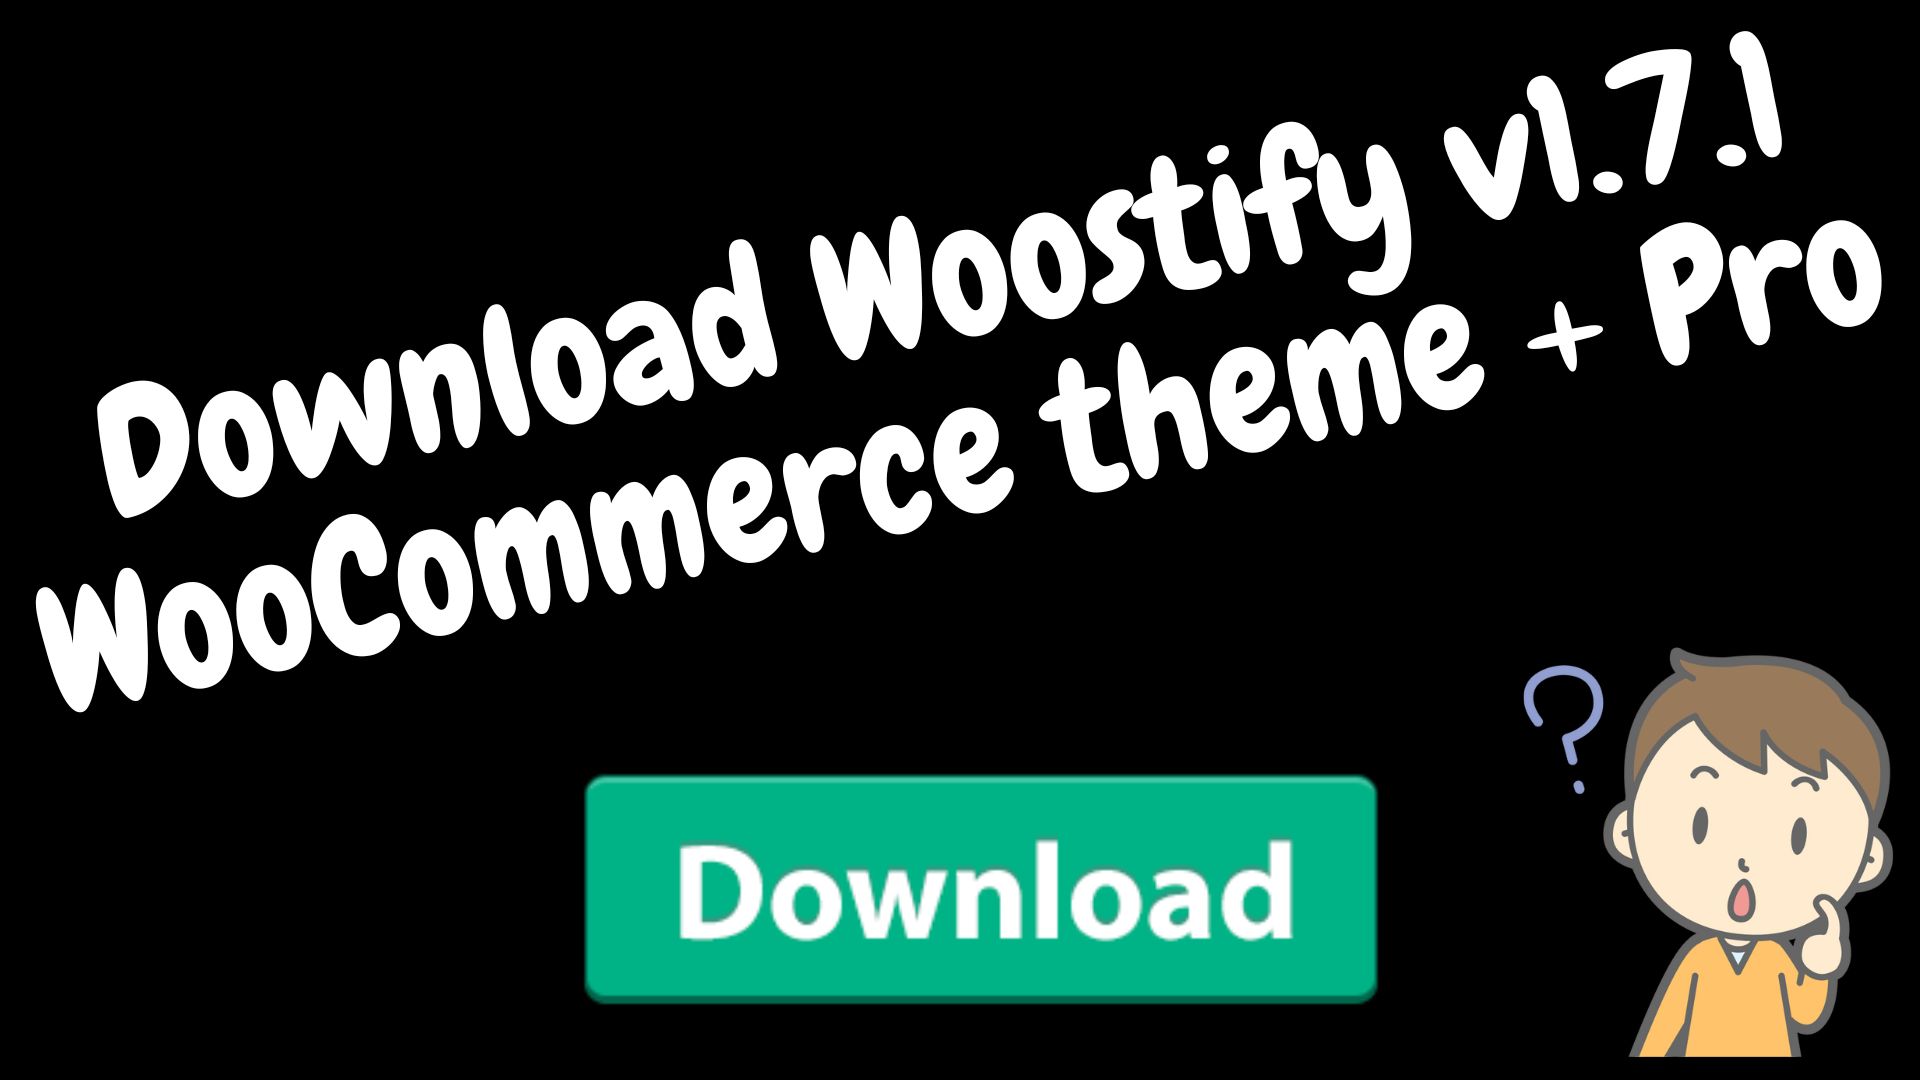 Download woostify v1. 7. 1 woocommerce theme + pro